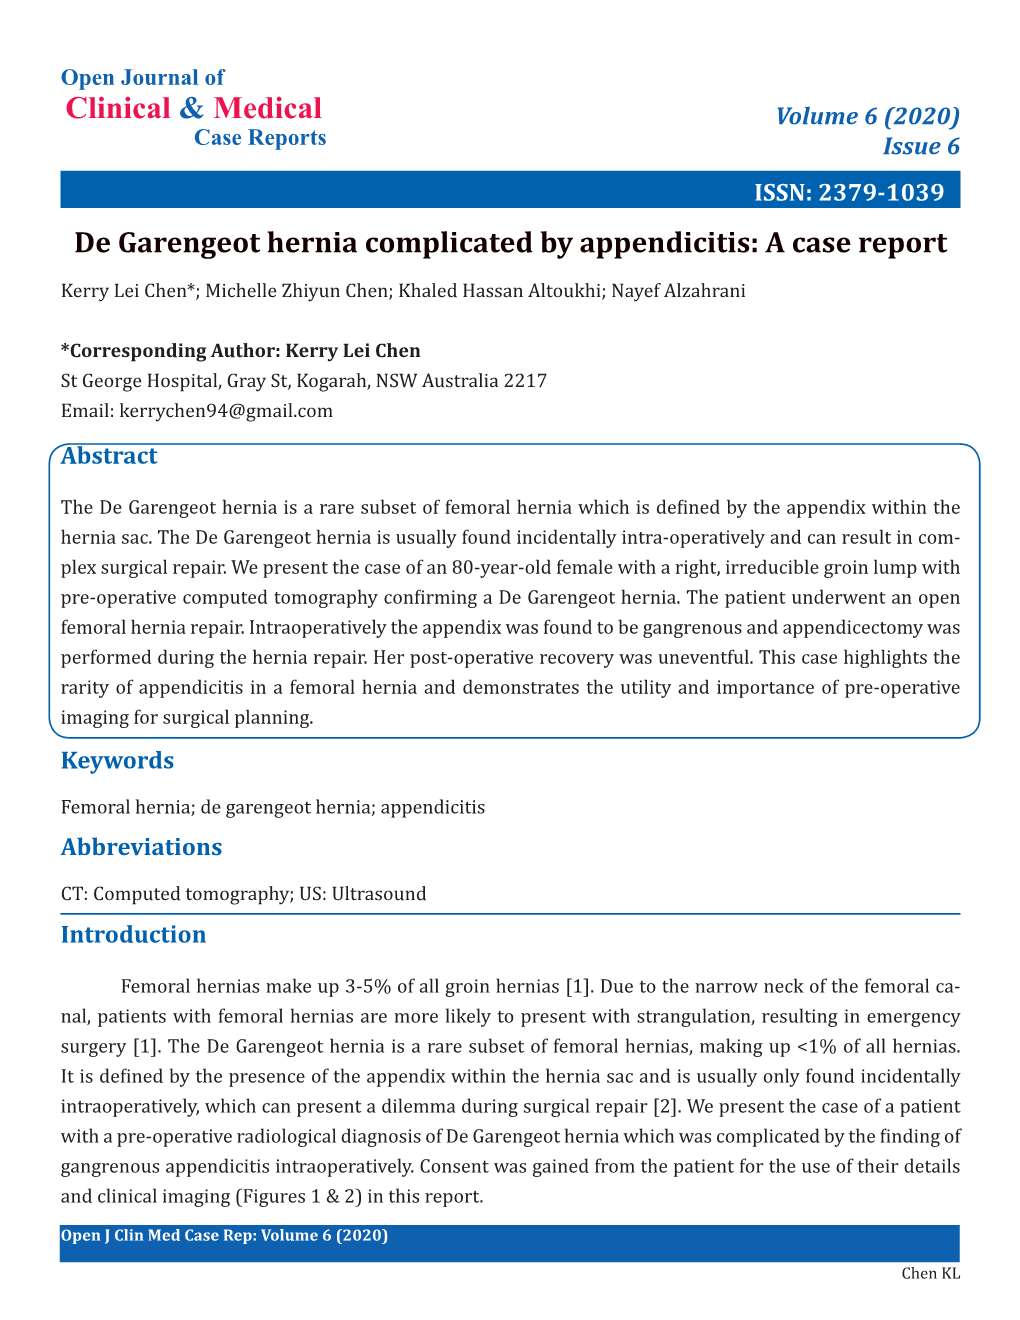 De Garengeot Hernia Complicated by Appendicitis: a Case Report